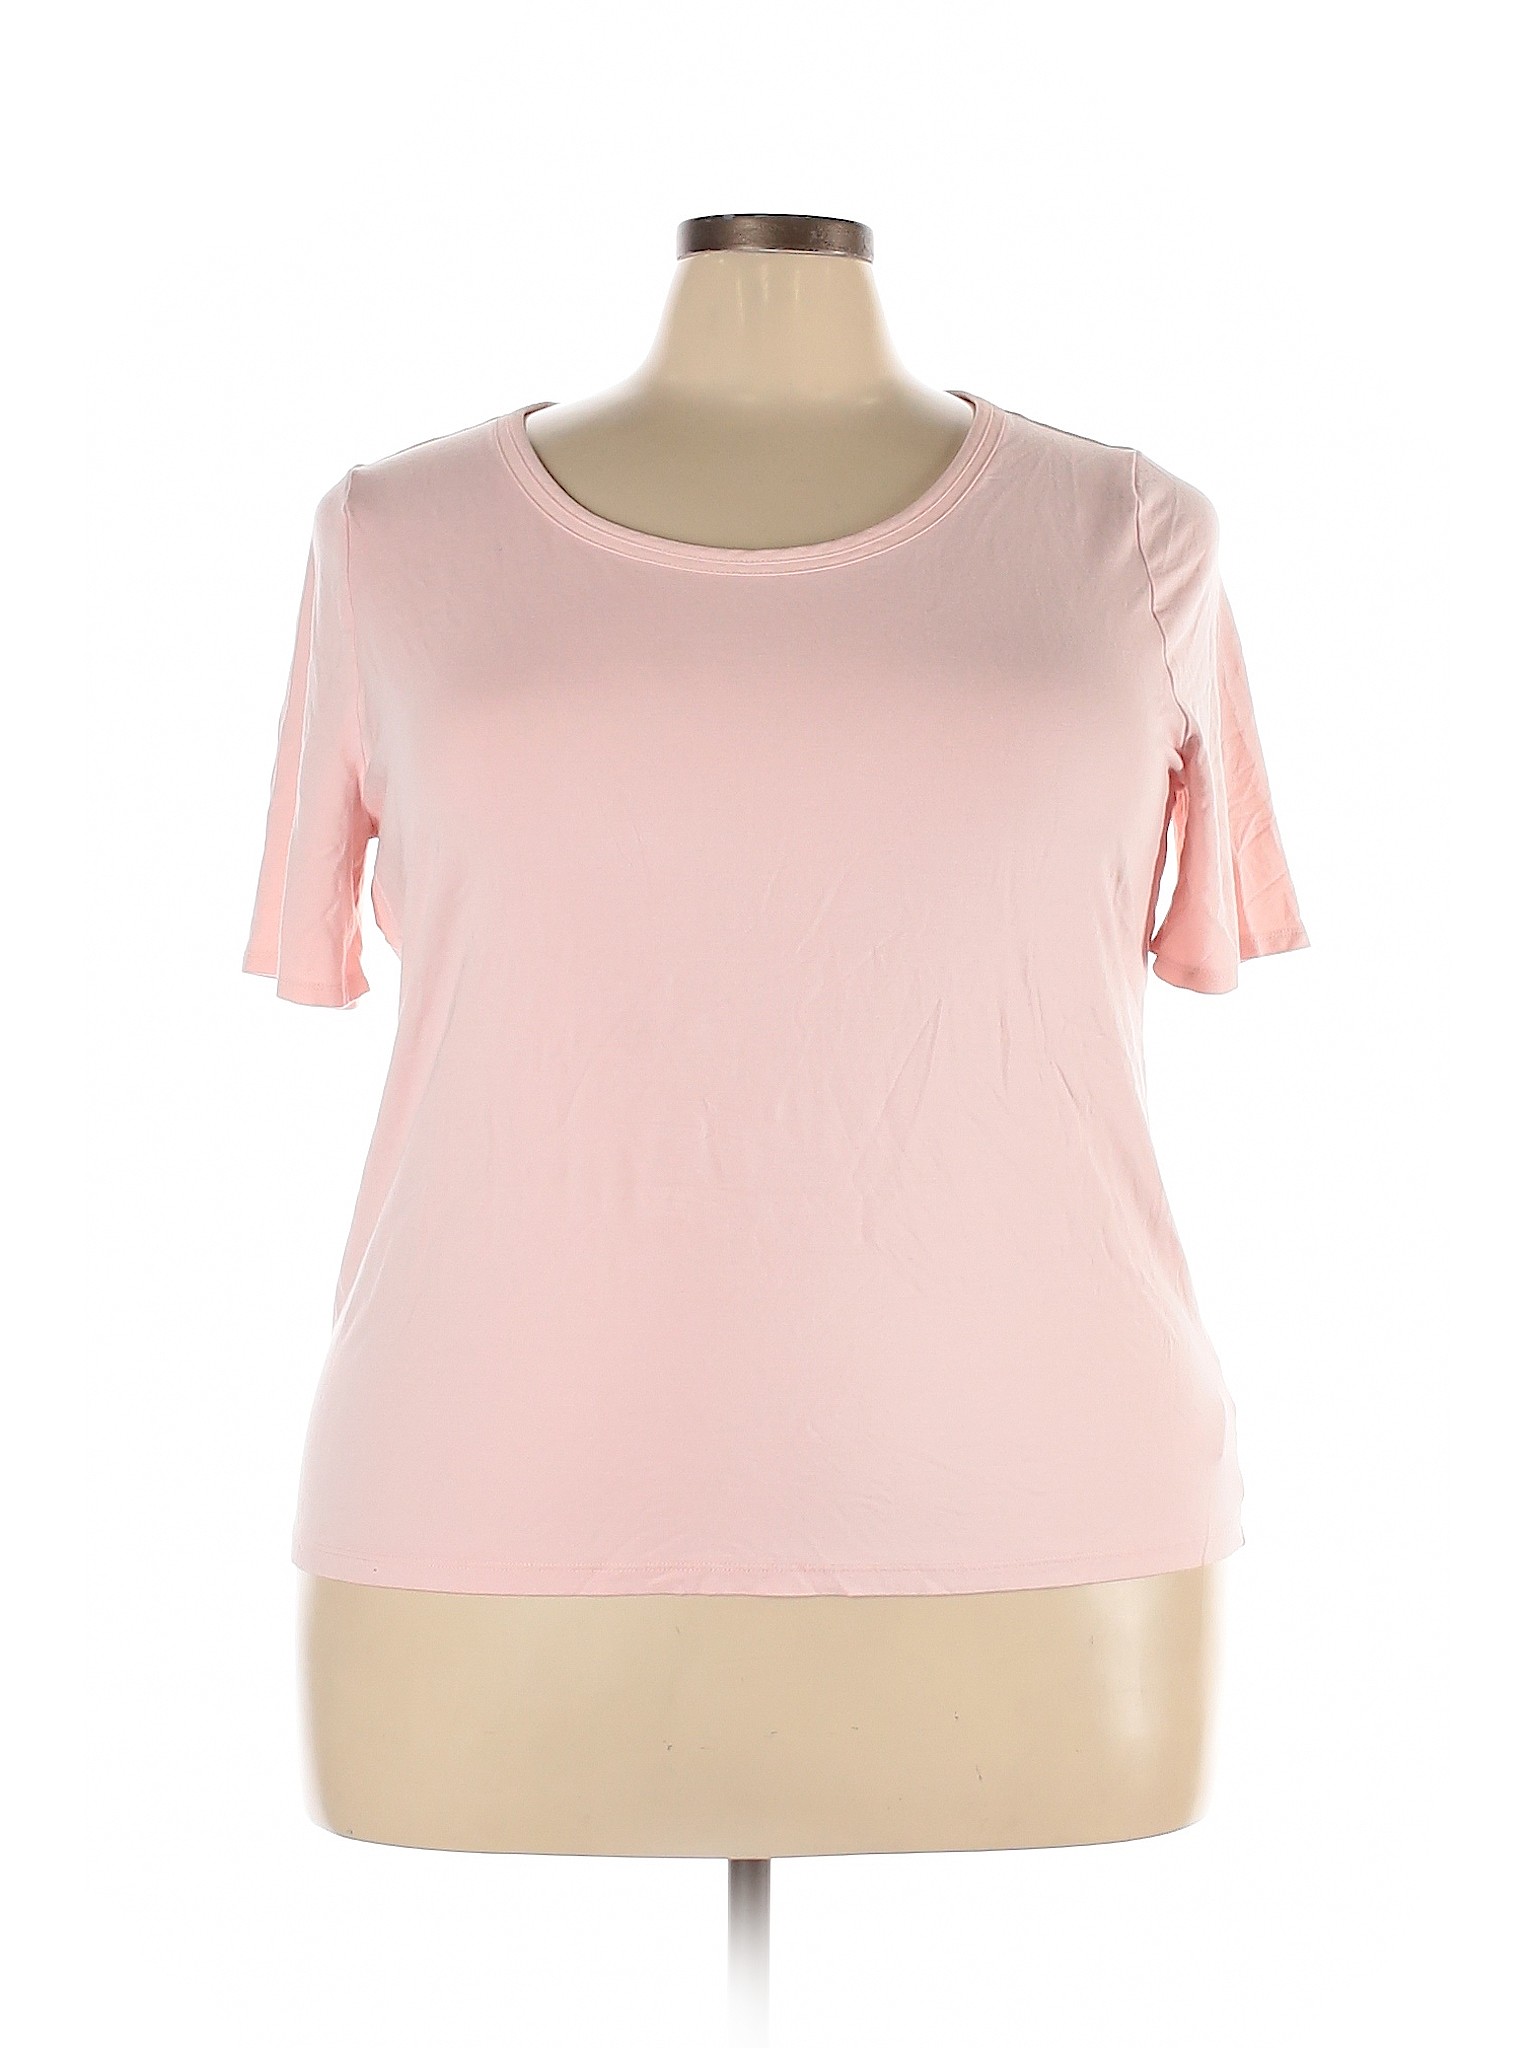 Talbots Women Pink Short Sleeve T-Shirt 3X Plus | eBay